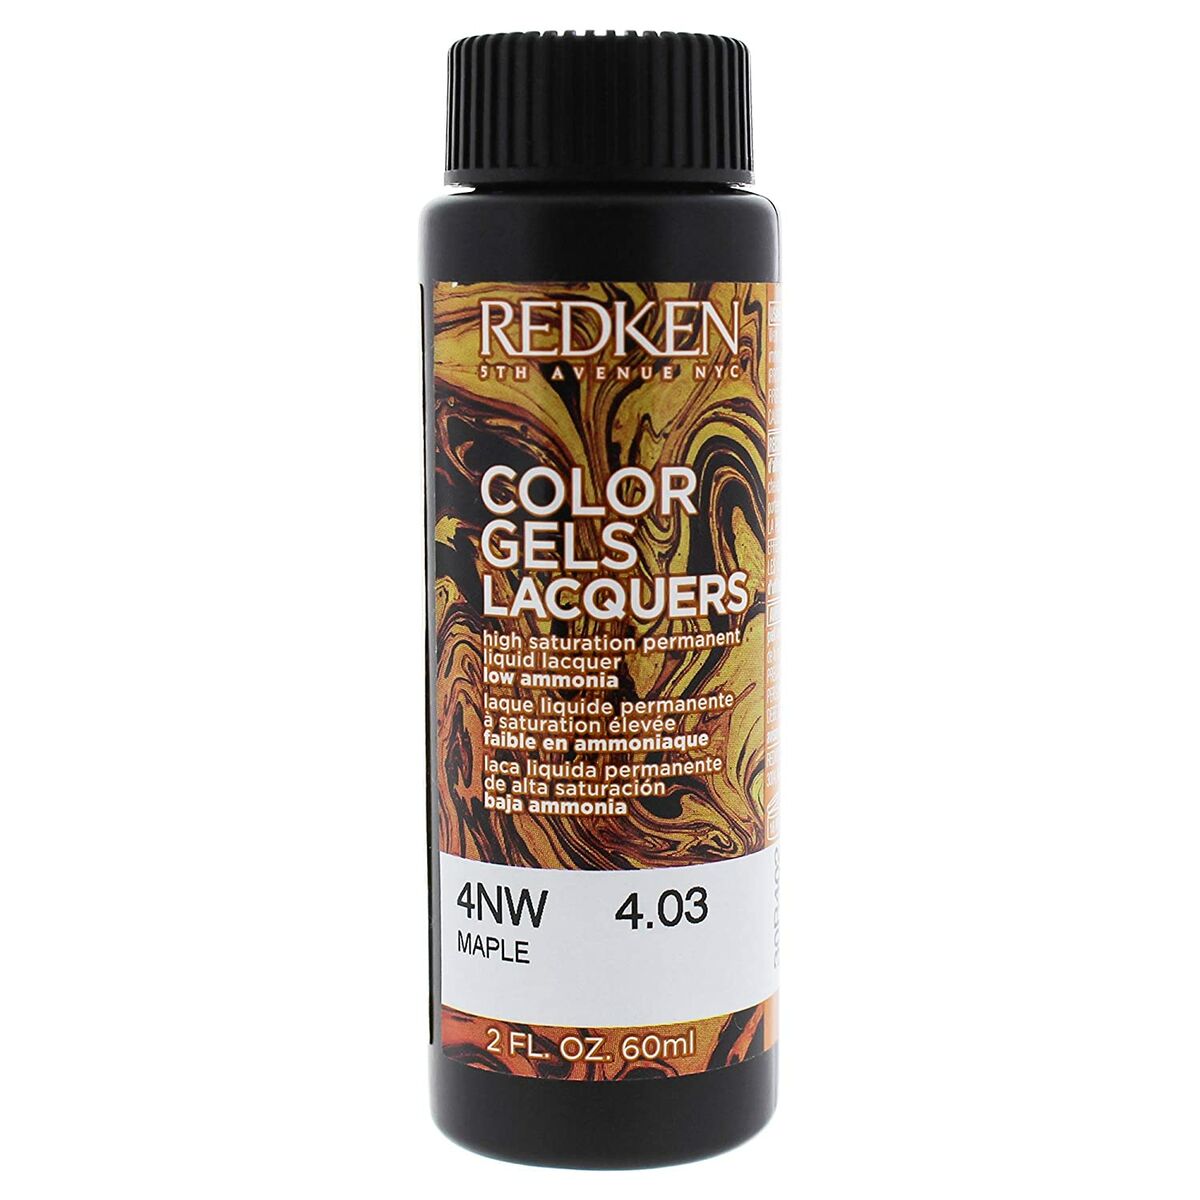 Kaufe Dauerhafte Coloration Redken Color Gel Lacquers 4NW-maple (3 x 60 ml) bei AWK Flagship um € 50.00